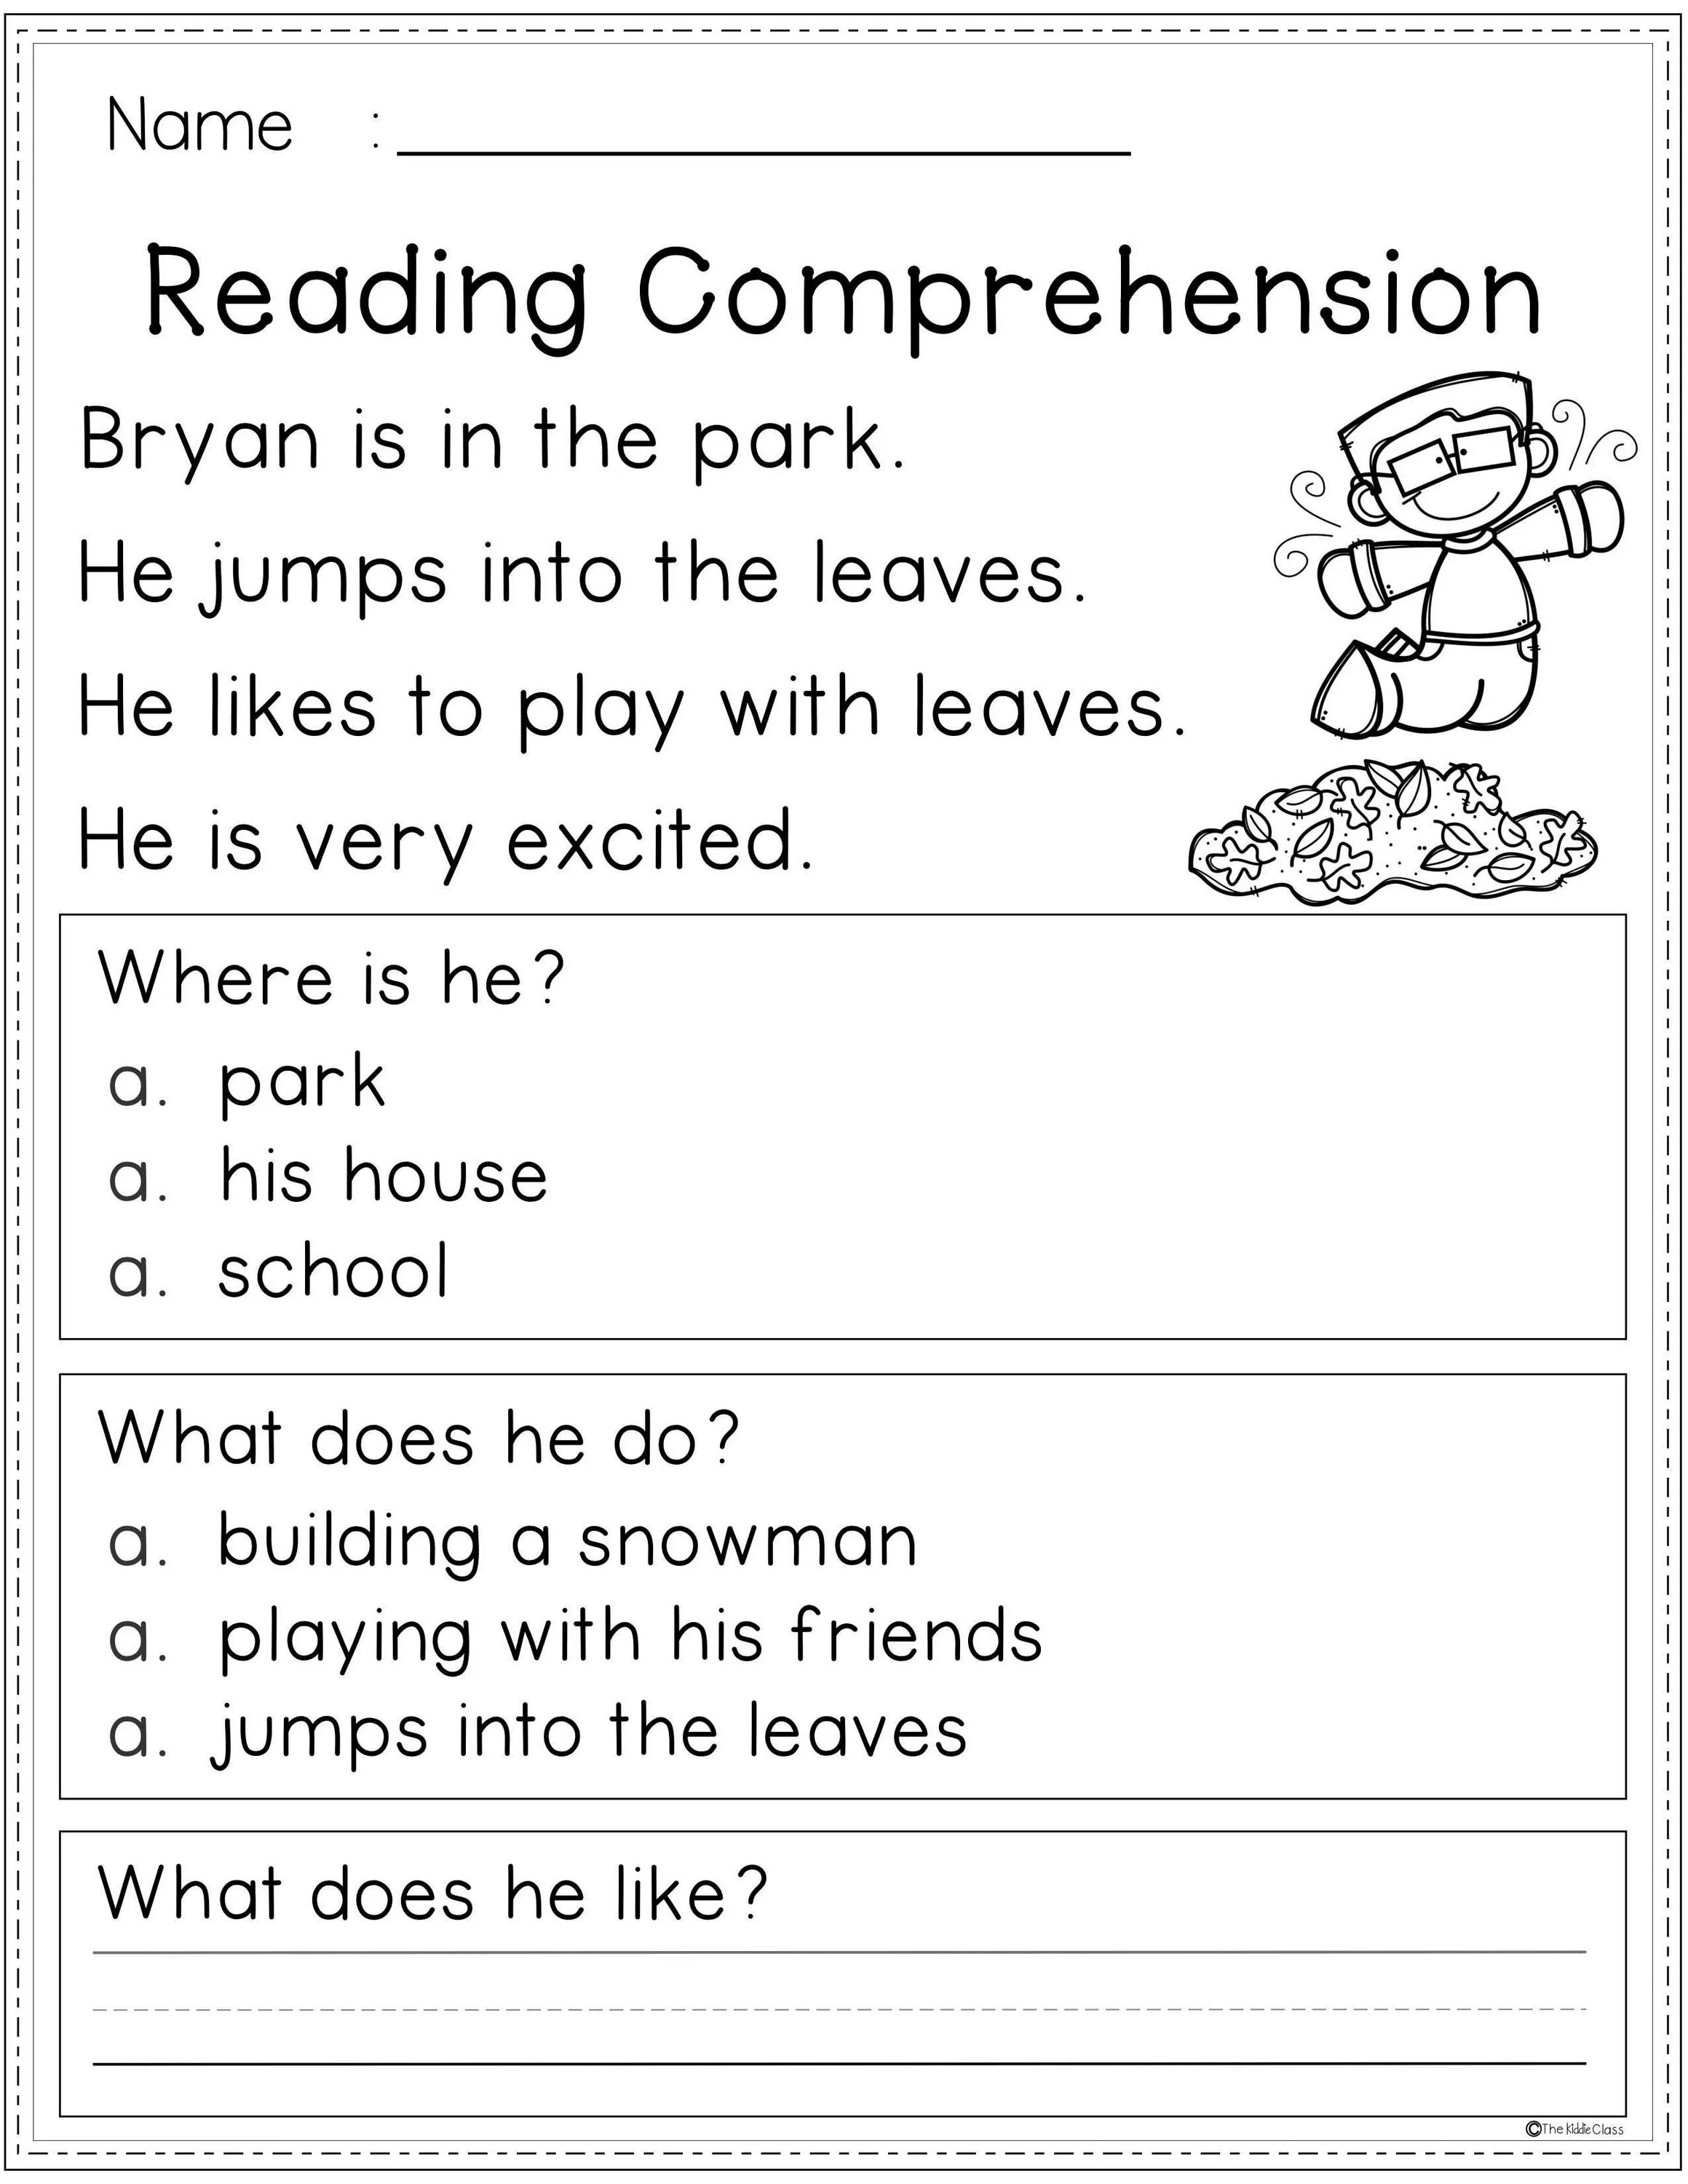 Reading Comprehension. Reading Worksheets 3 класс. Reading Comprehension 2 класс. Comprehension Grade 1.